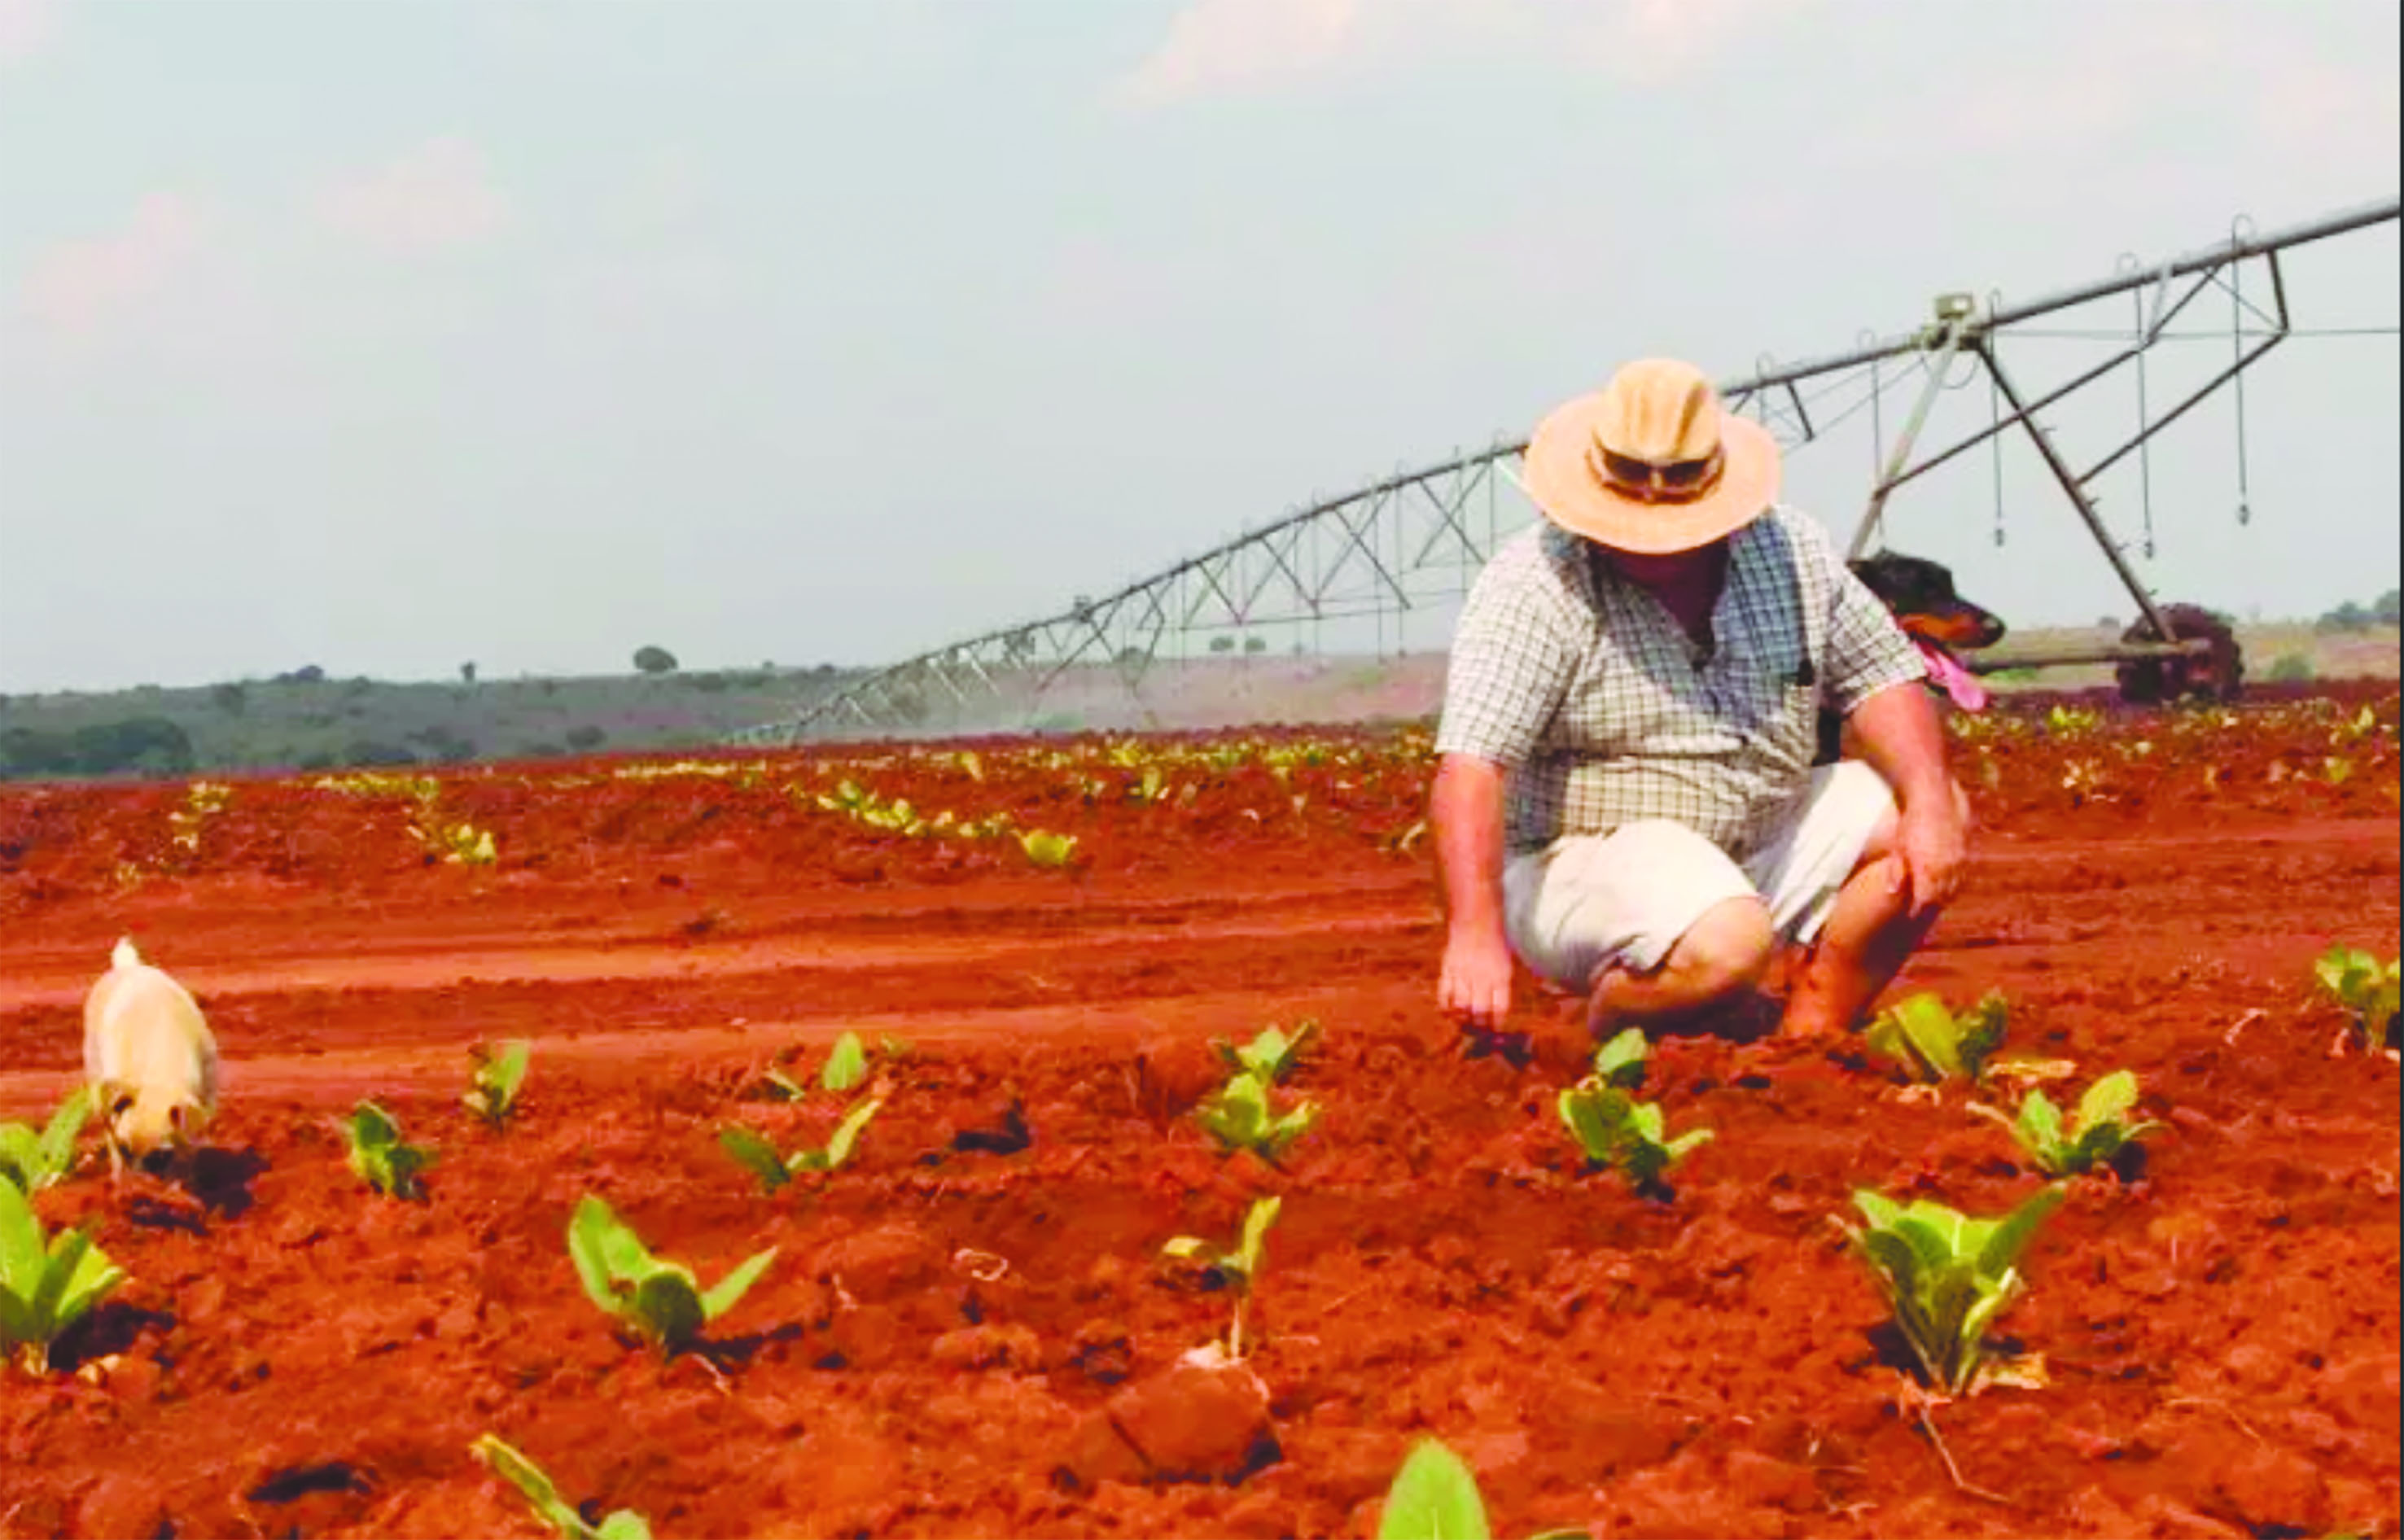 Lifeline for white Zimbabwean farmers